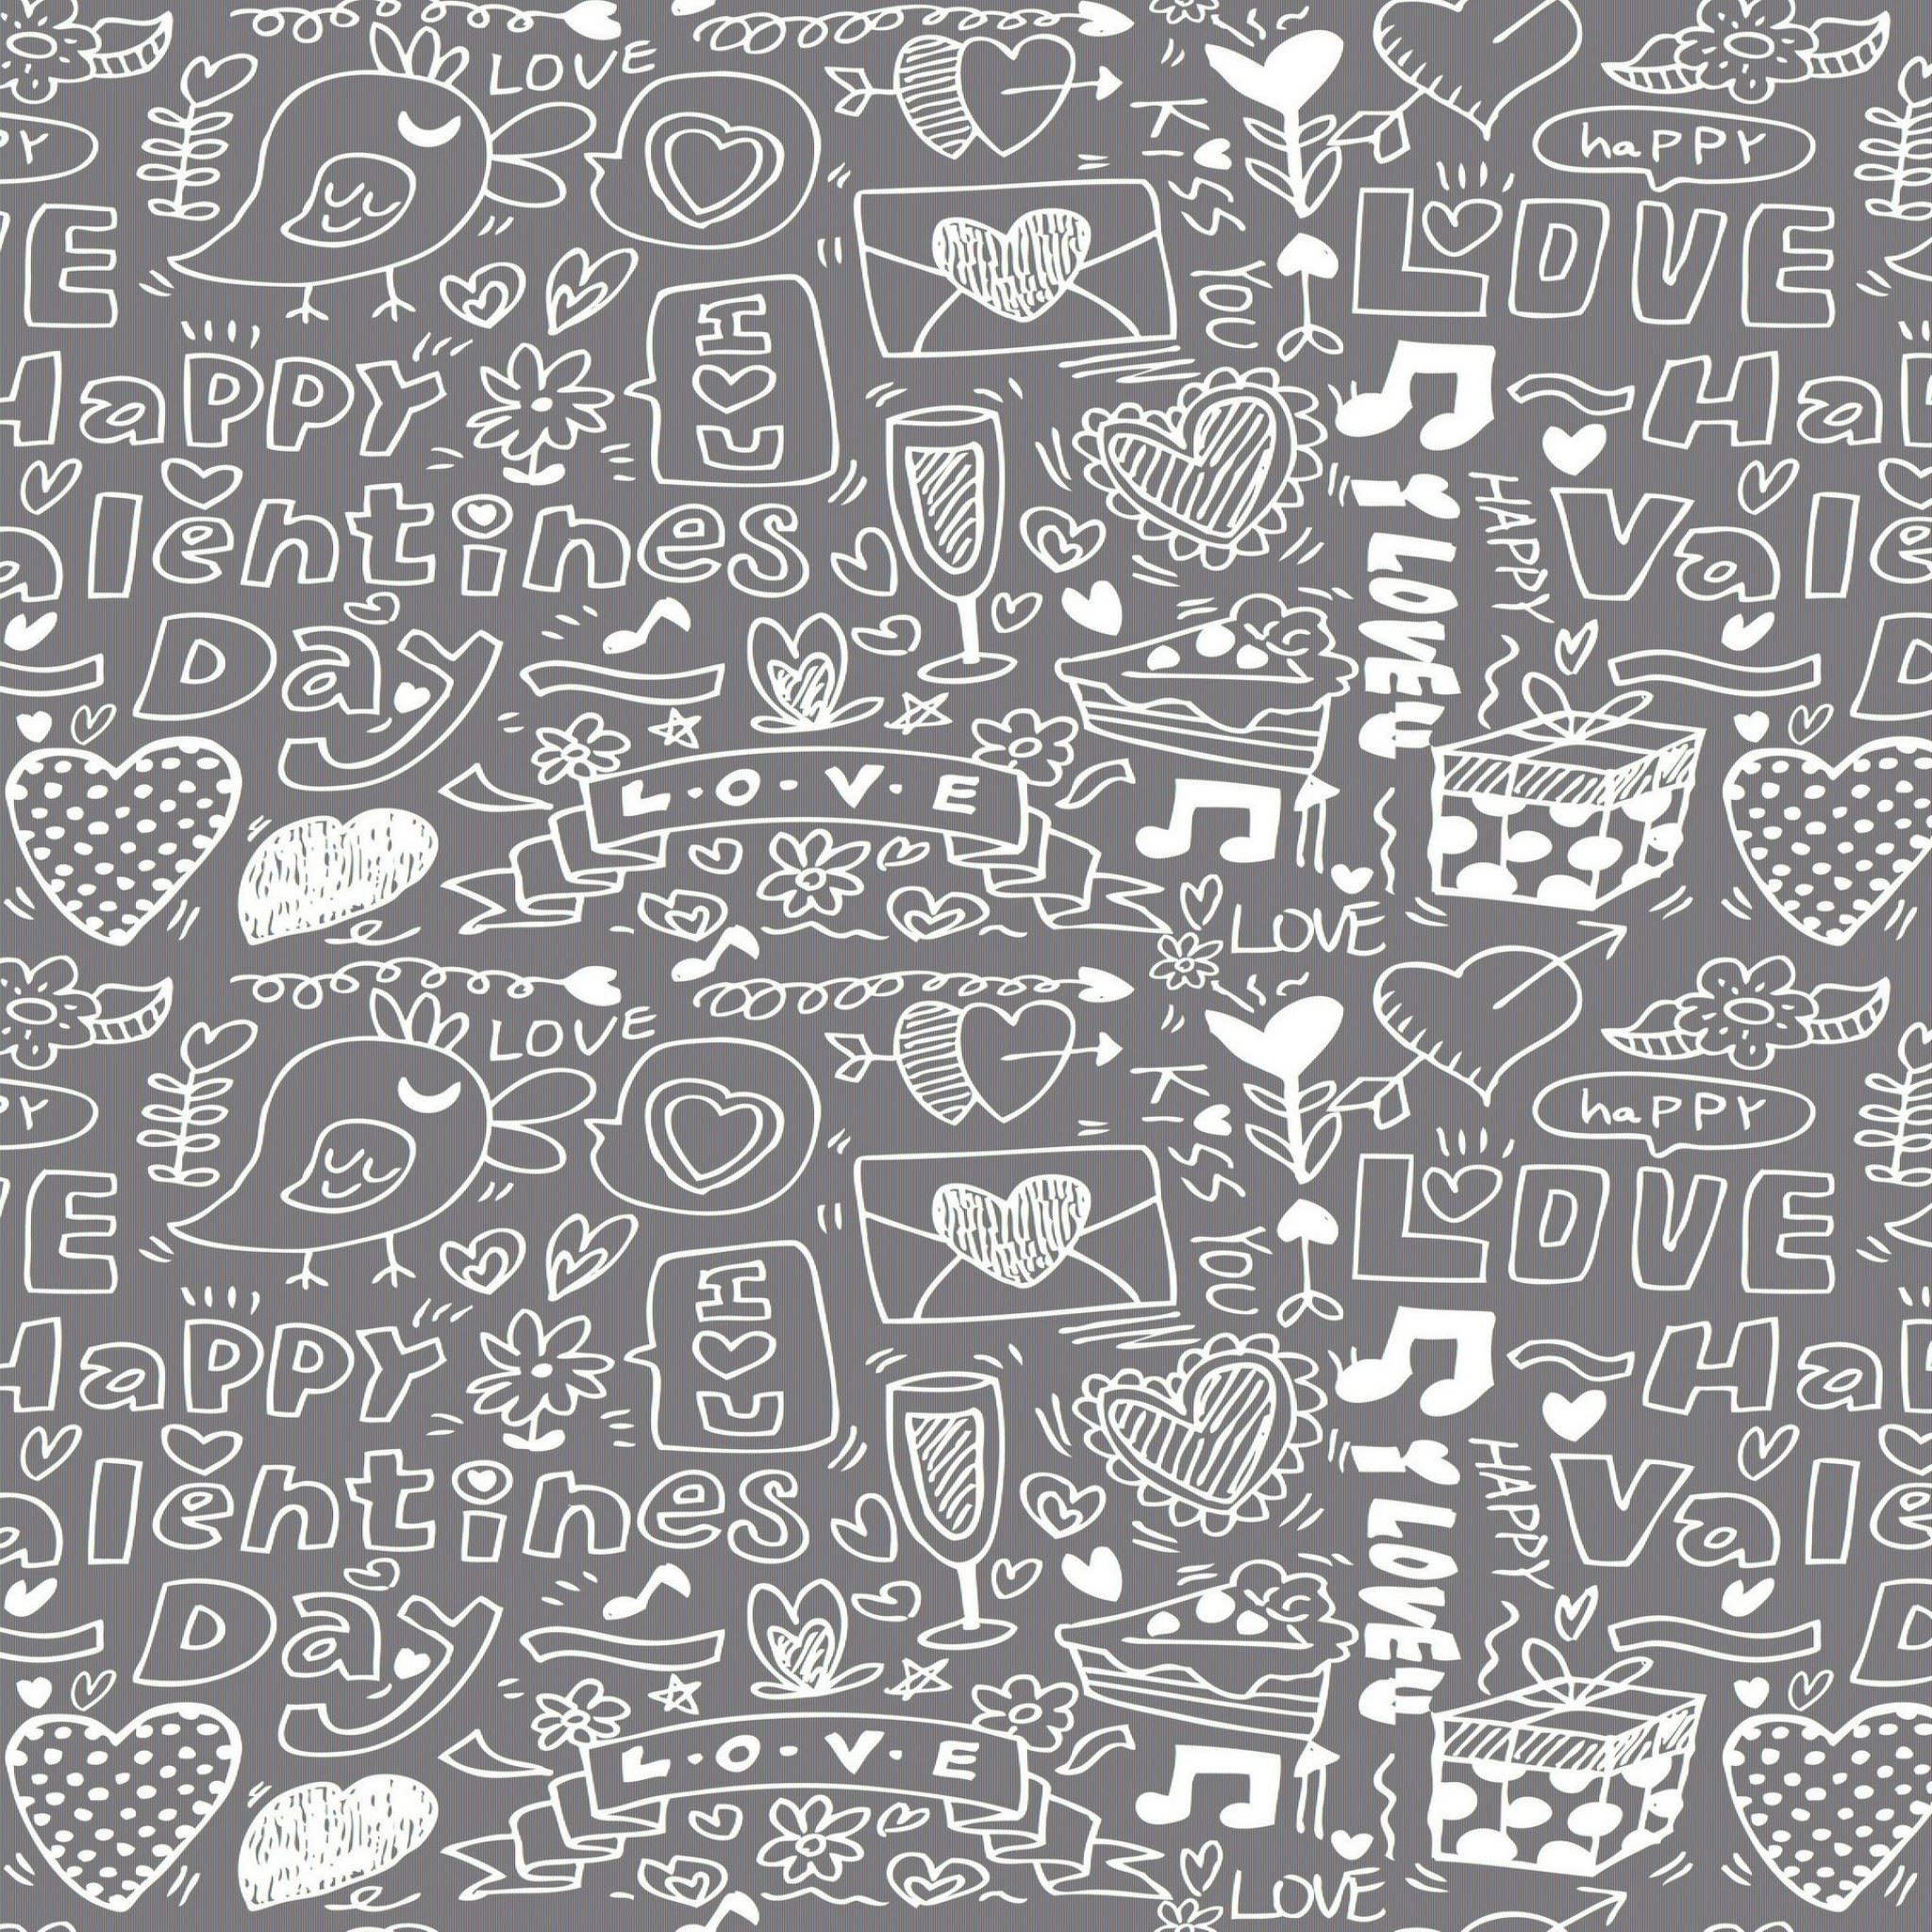 Love Happiness iPad Air wallpaper 